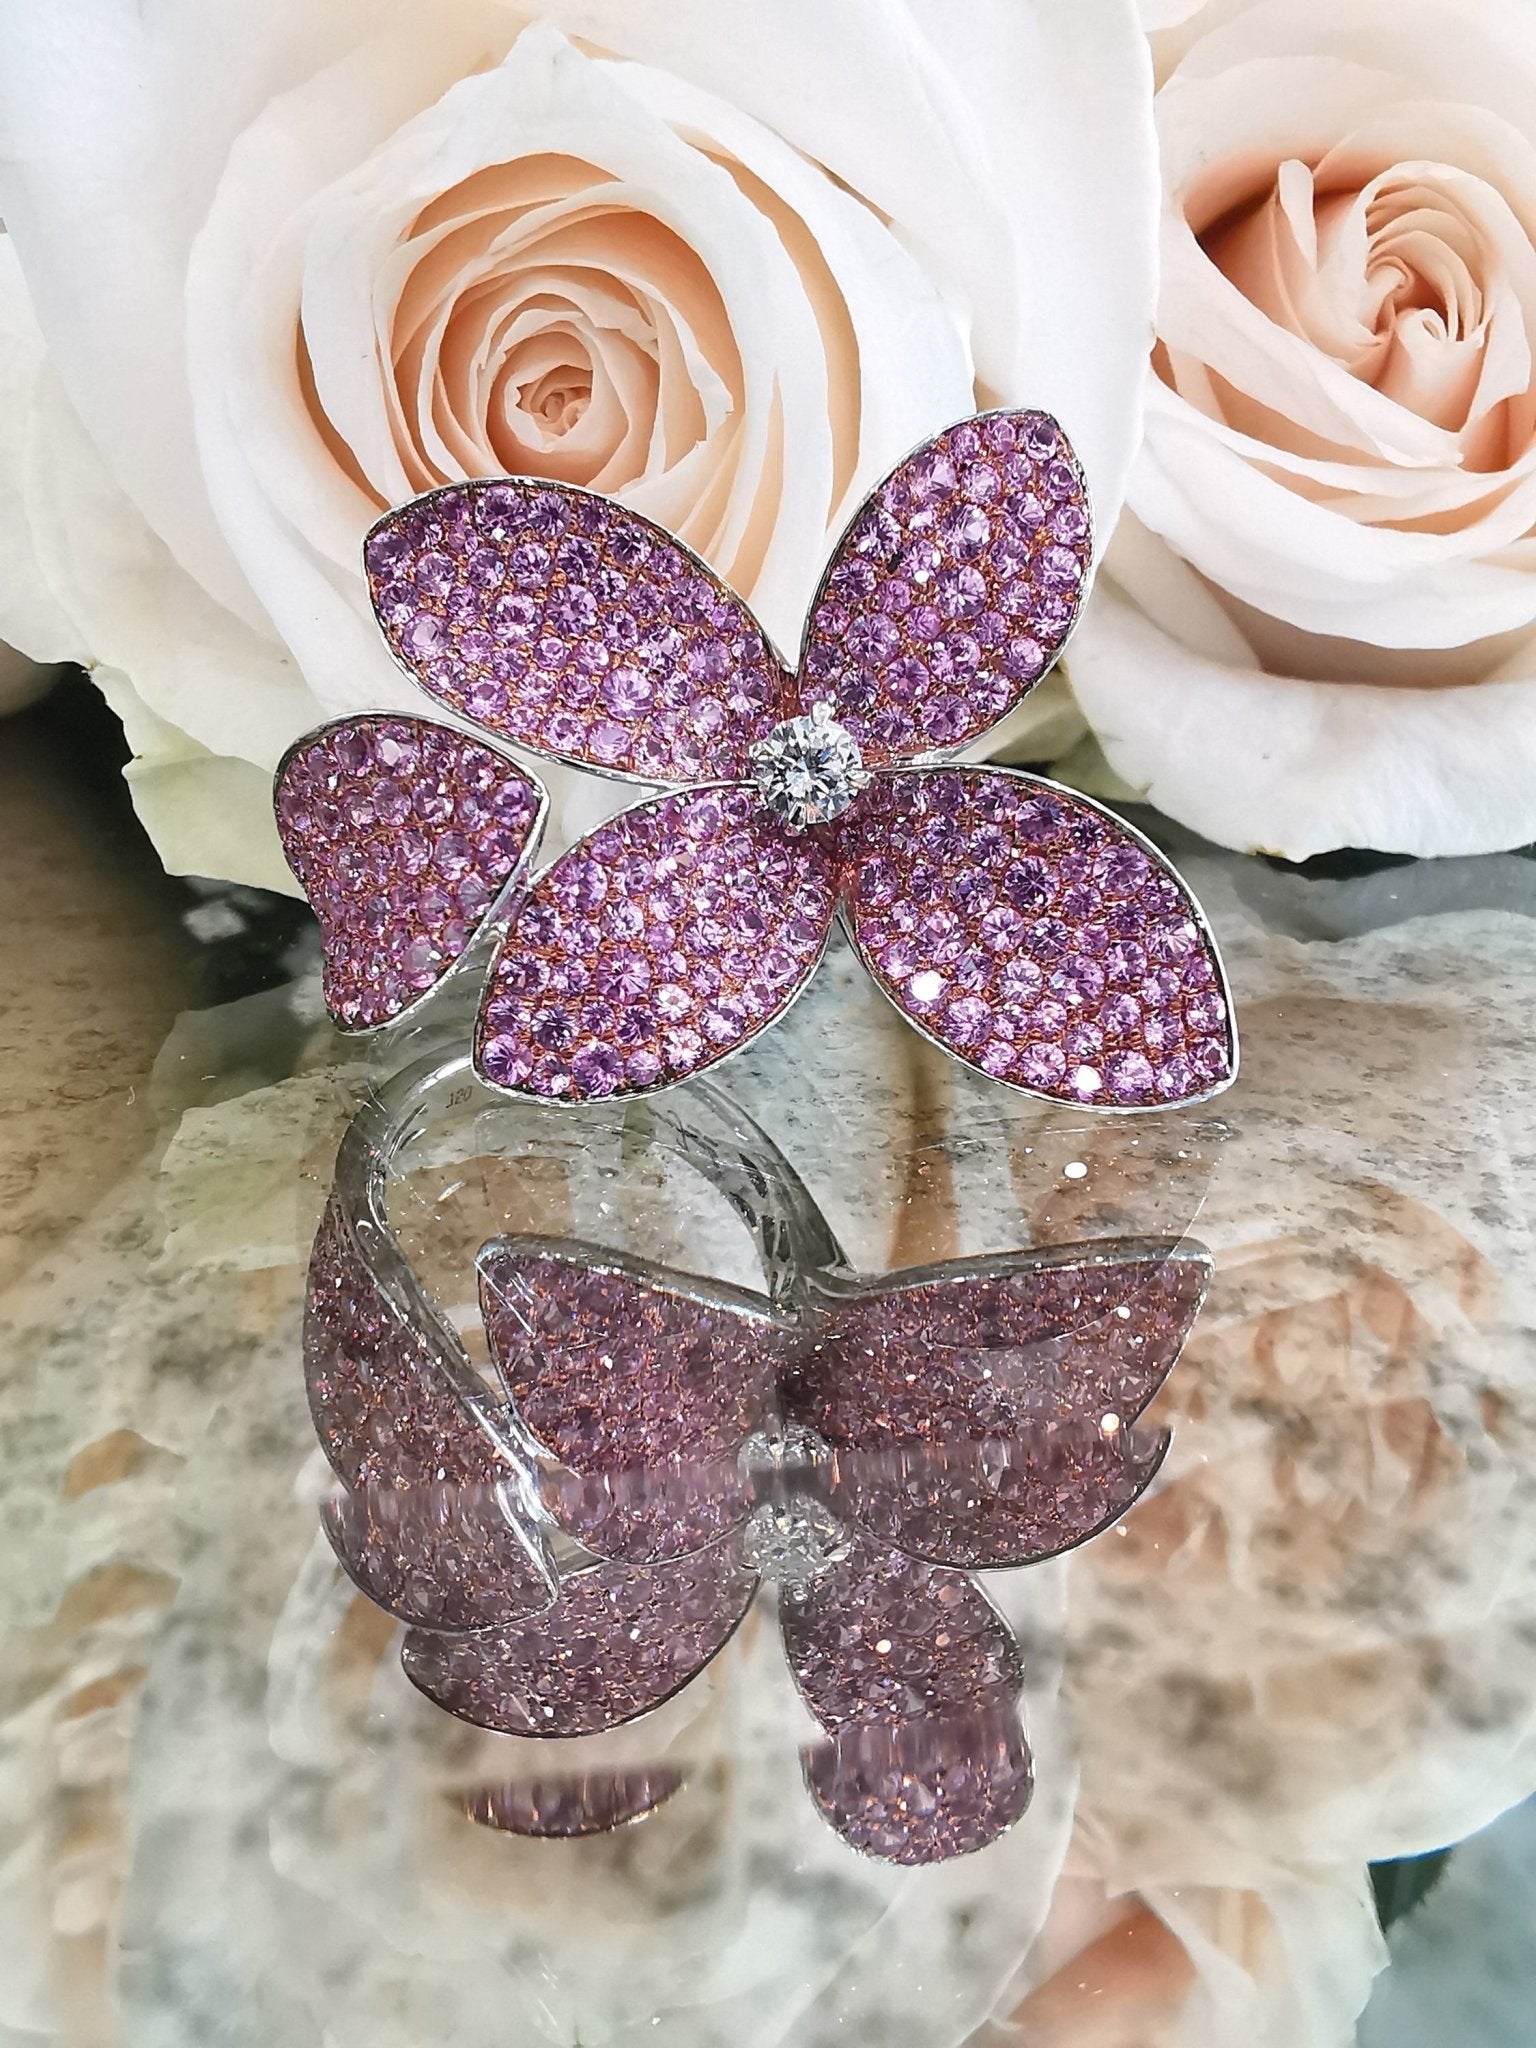 Pink Sapphire Flower Ring - ForeverJewels Design Studio 8